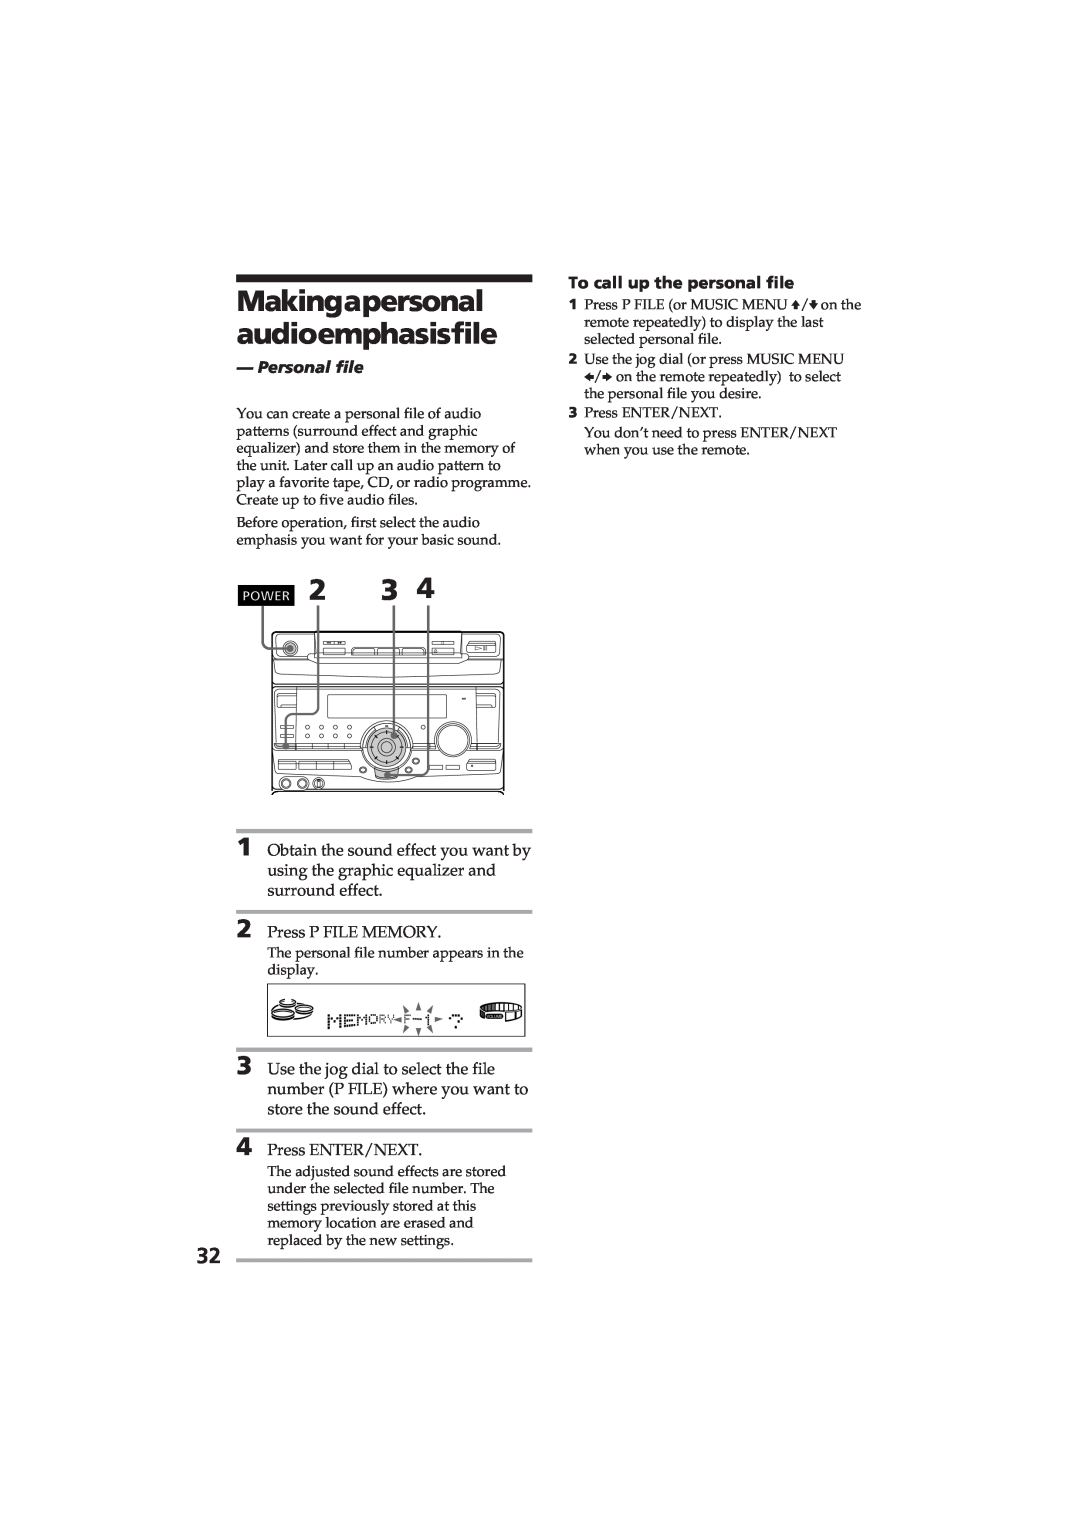 Sony MHC-RX80 manual Makingapersonal audioemphasisfile, Personal file, To call up the personal file, Press P FILE MEMORY 